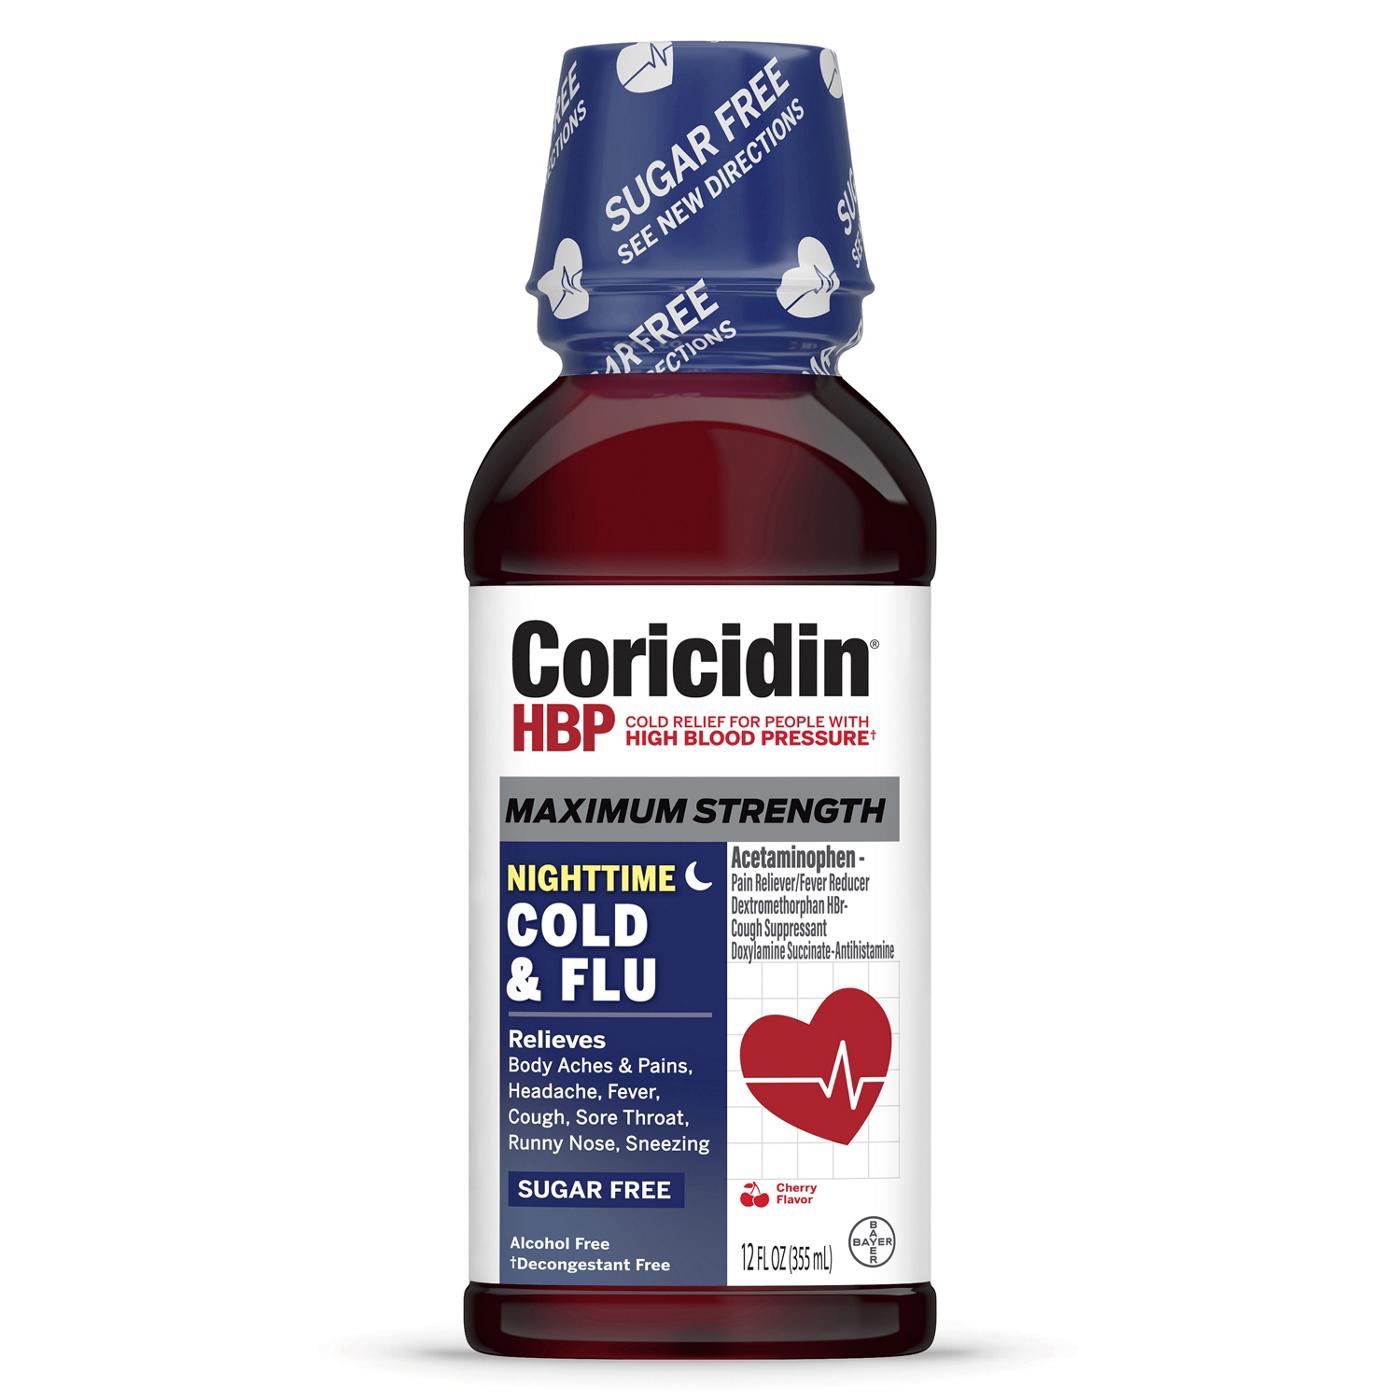 Coricidin HPB Maximum Strength Cold & Flu Night Liquid